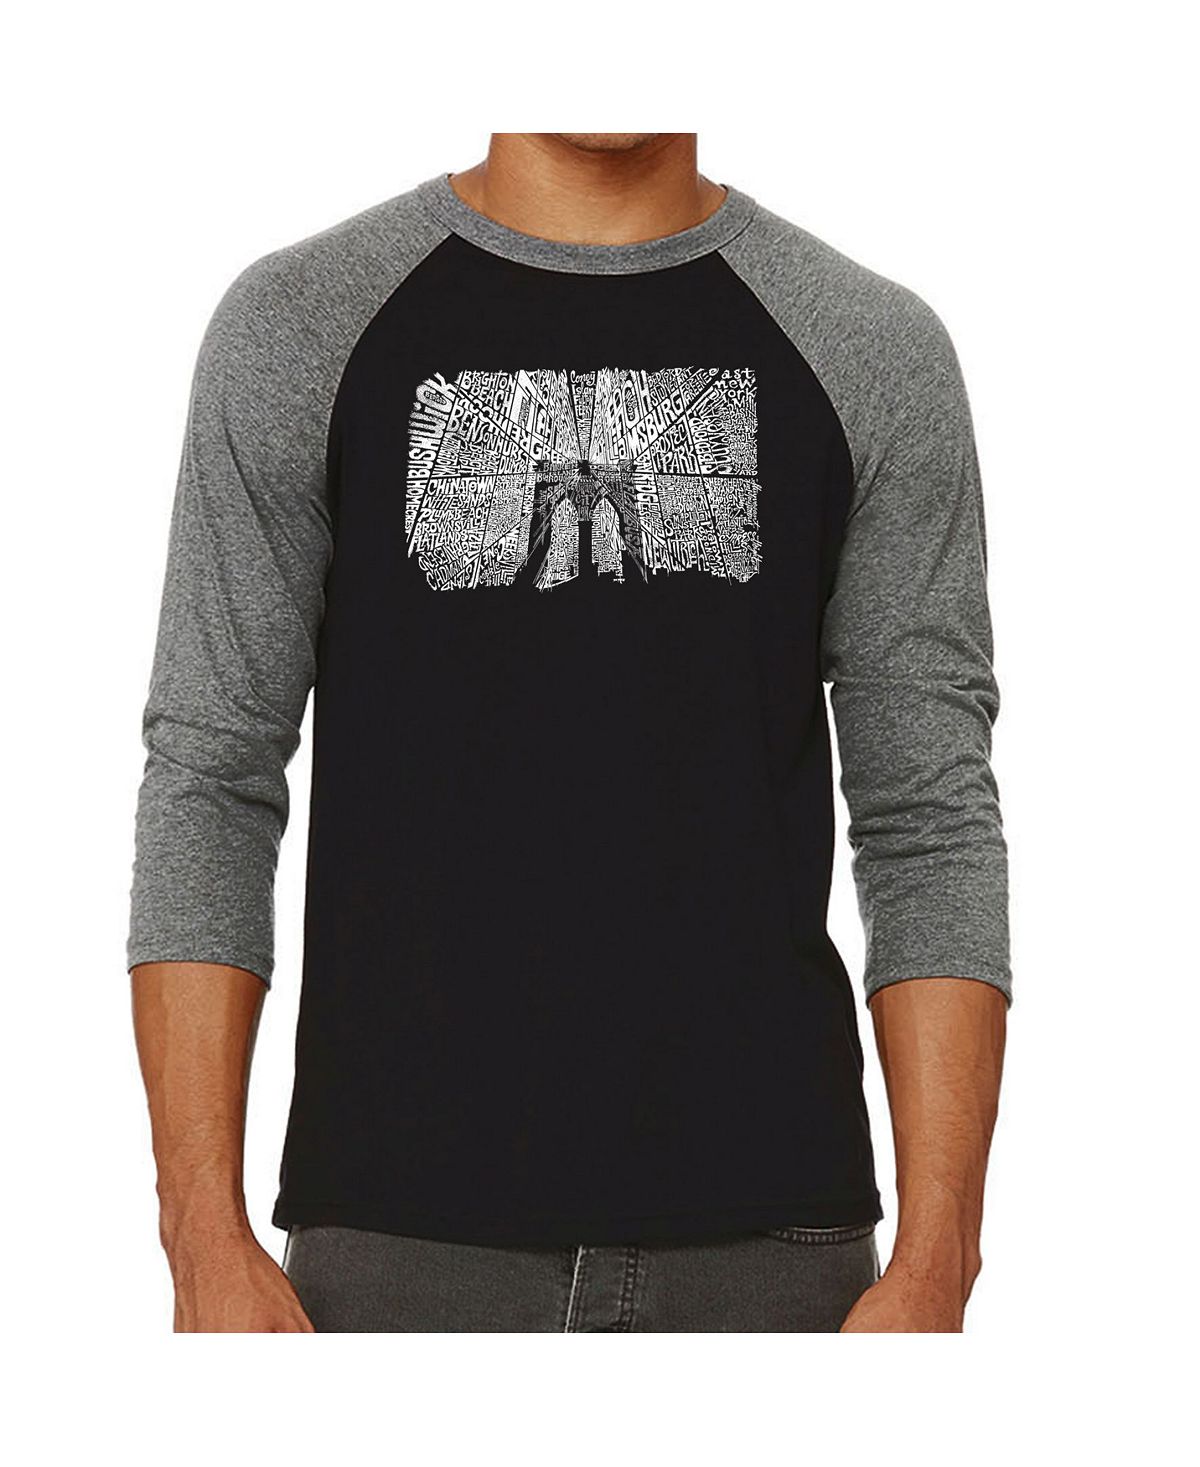 Мужская футболка с надписью brooklyn bridge реглан word art LA Pop Art, серый